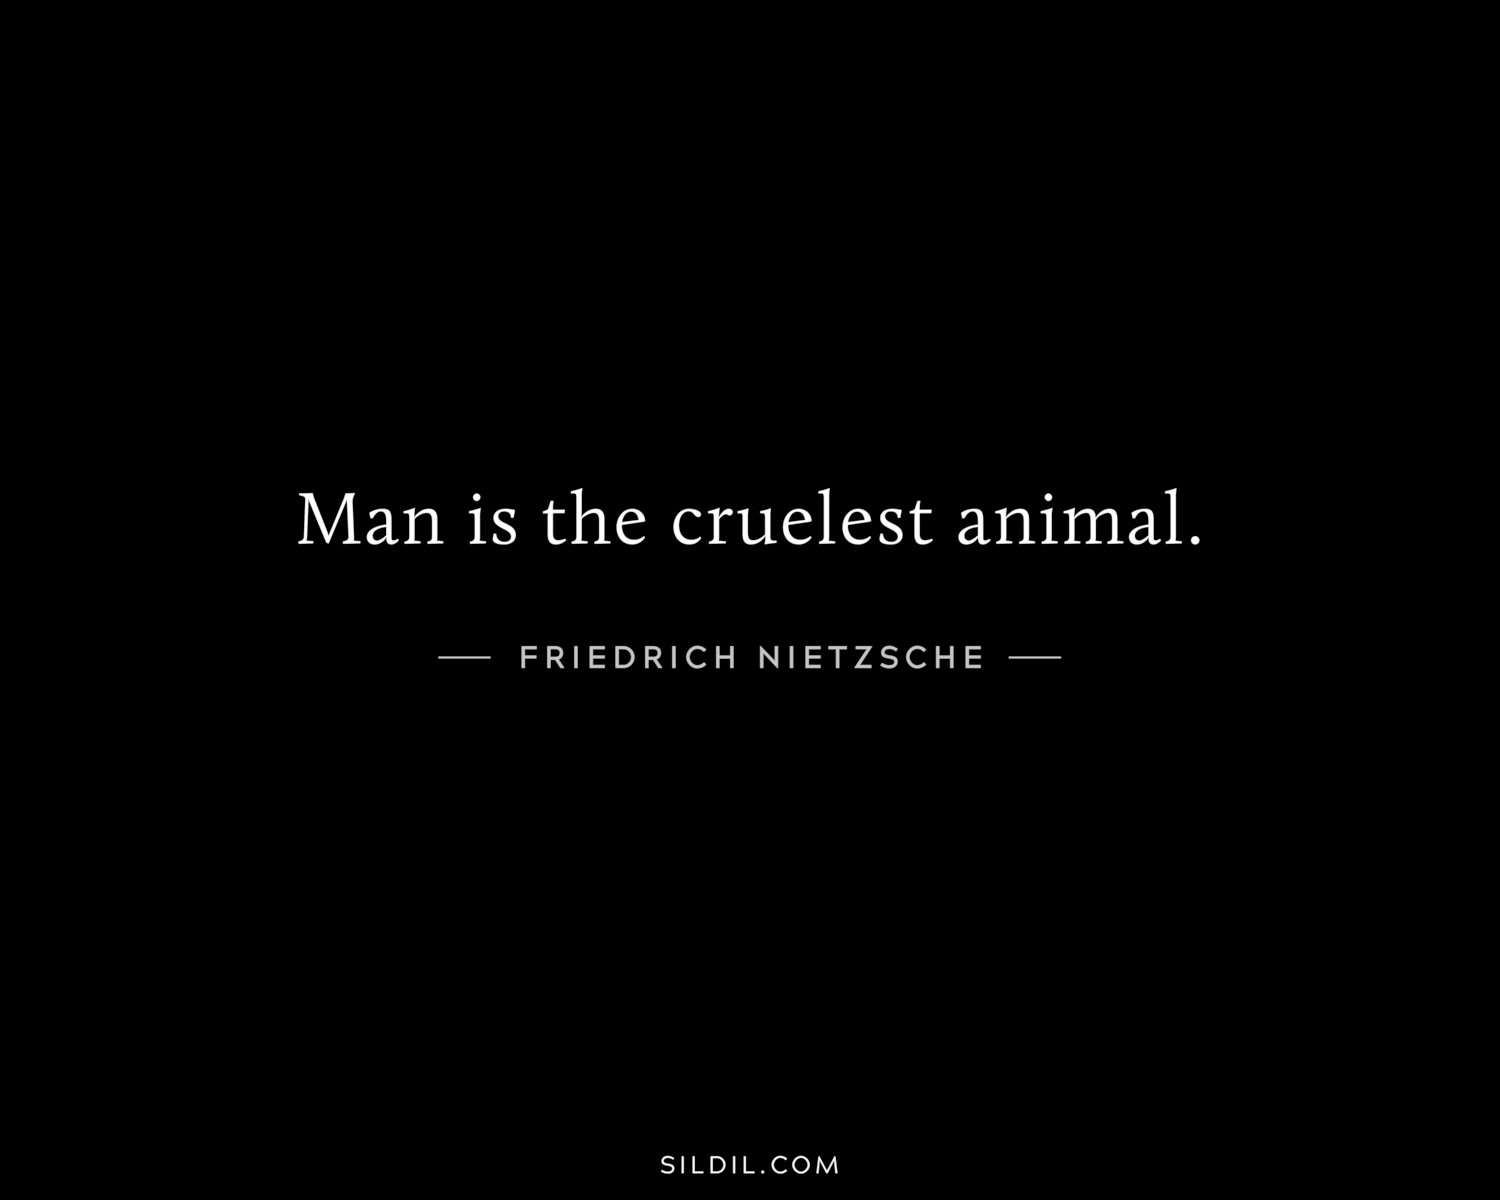 Man is the cruelest animal.